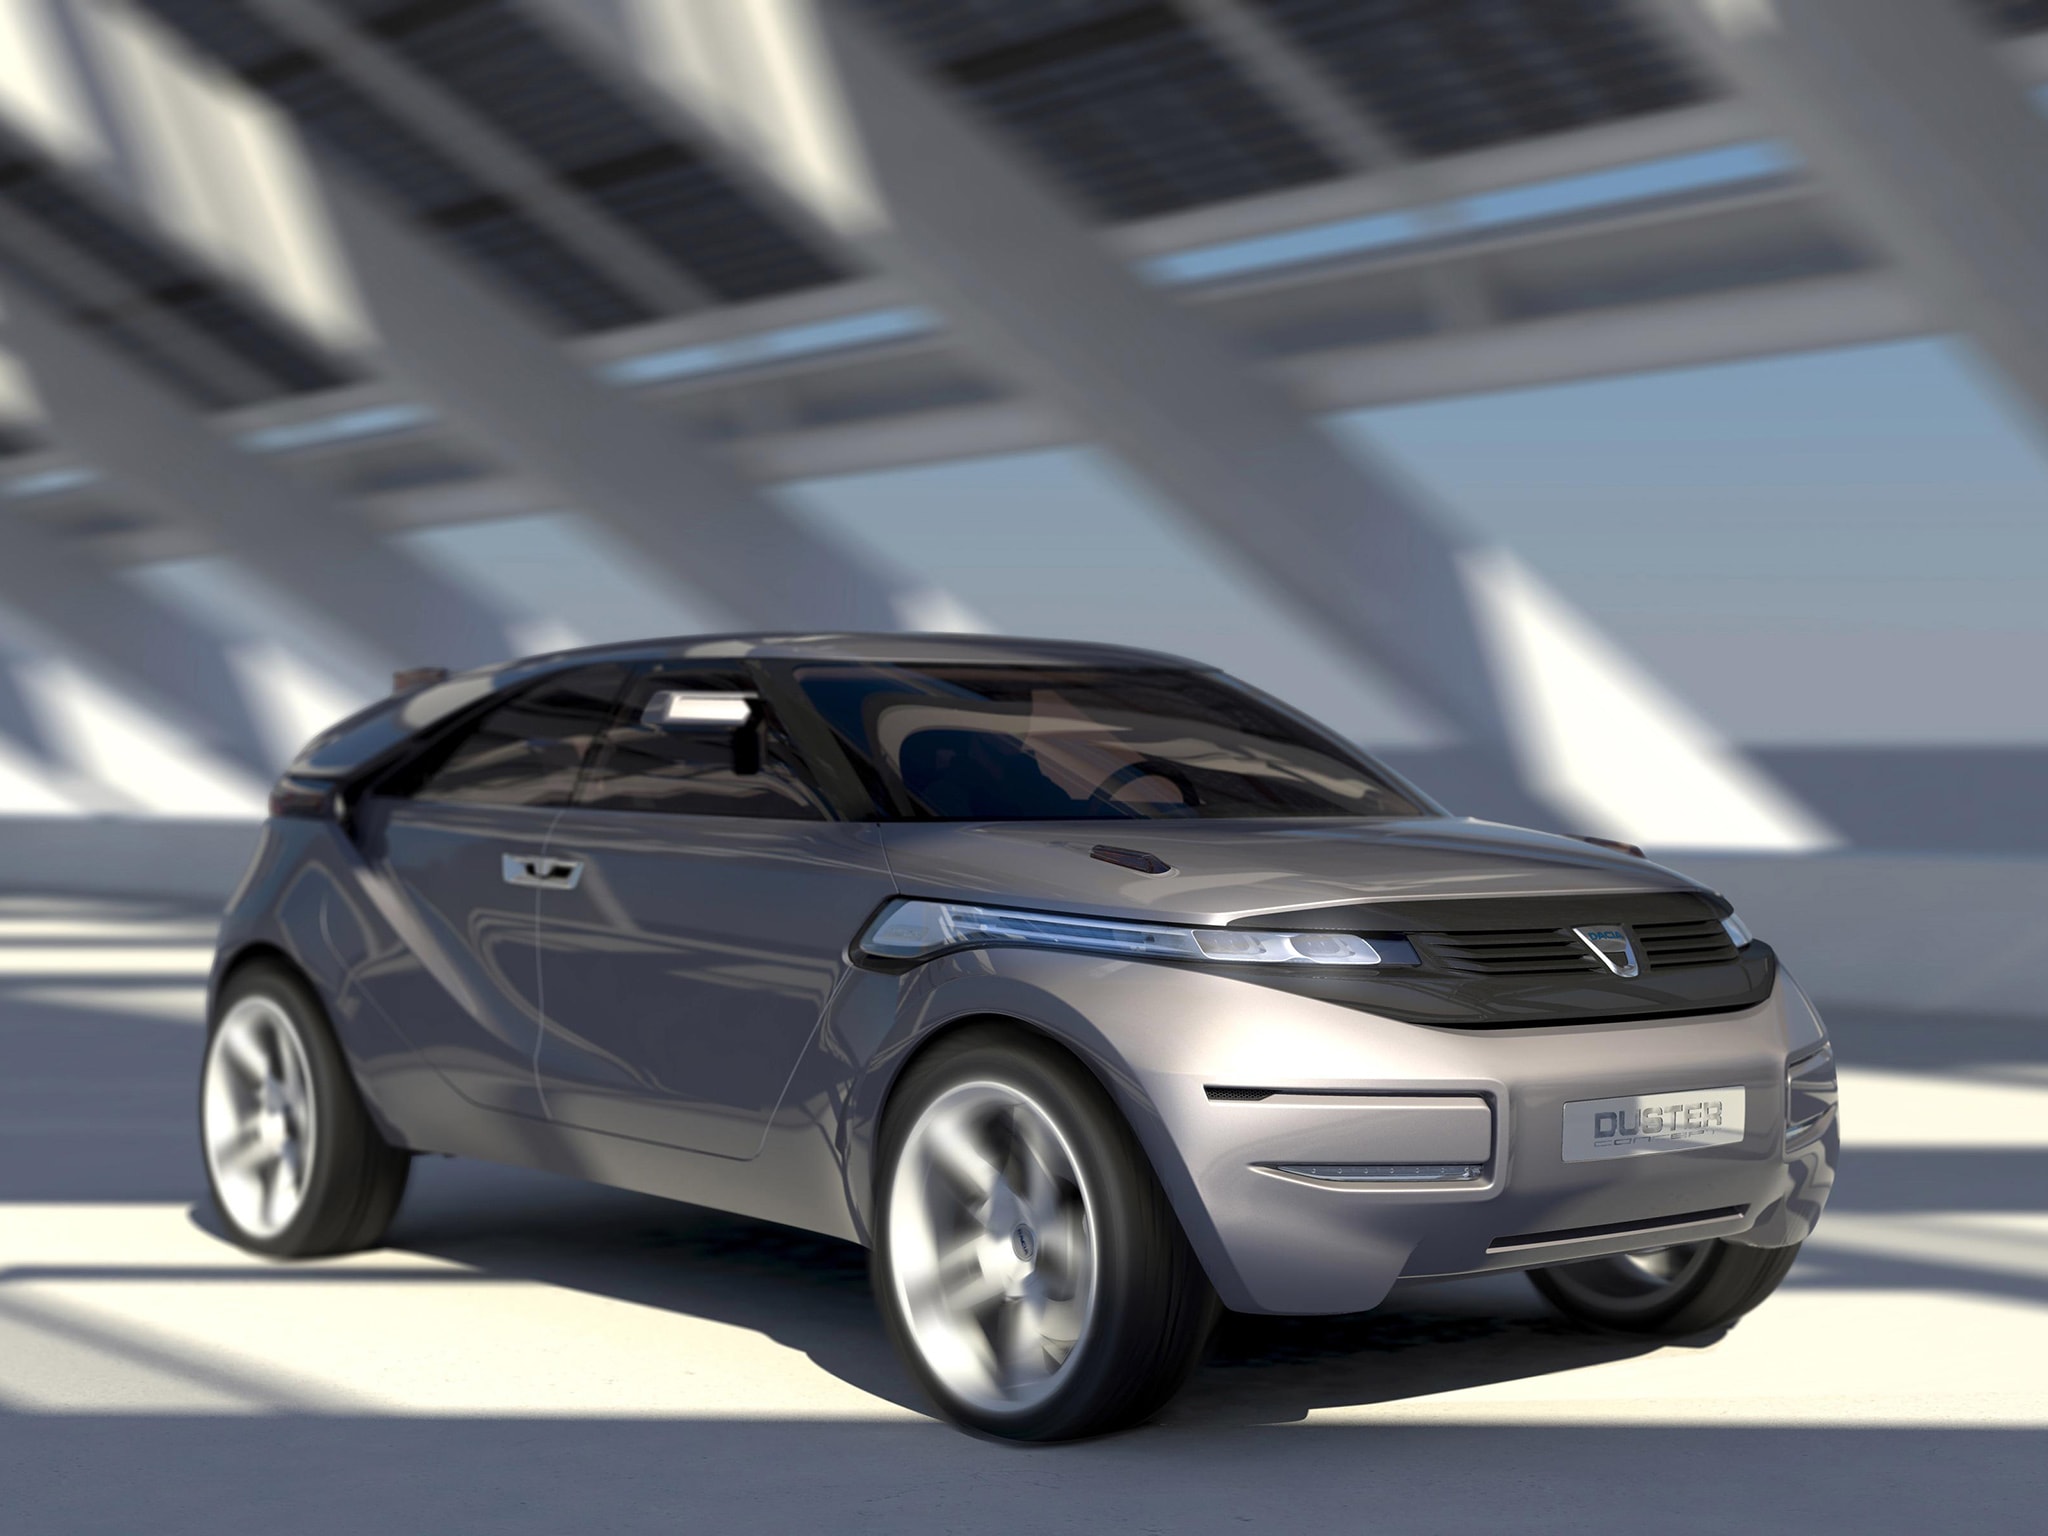 Budget-Friendly Dacia Sandero EV Coming In 2027 Or 2028